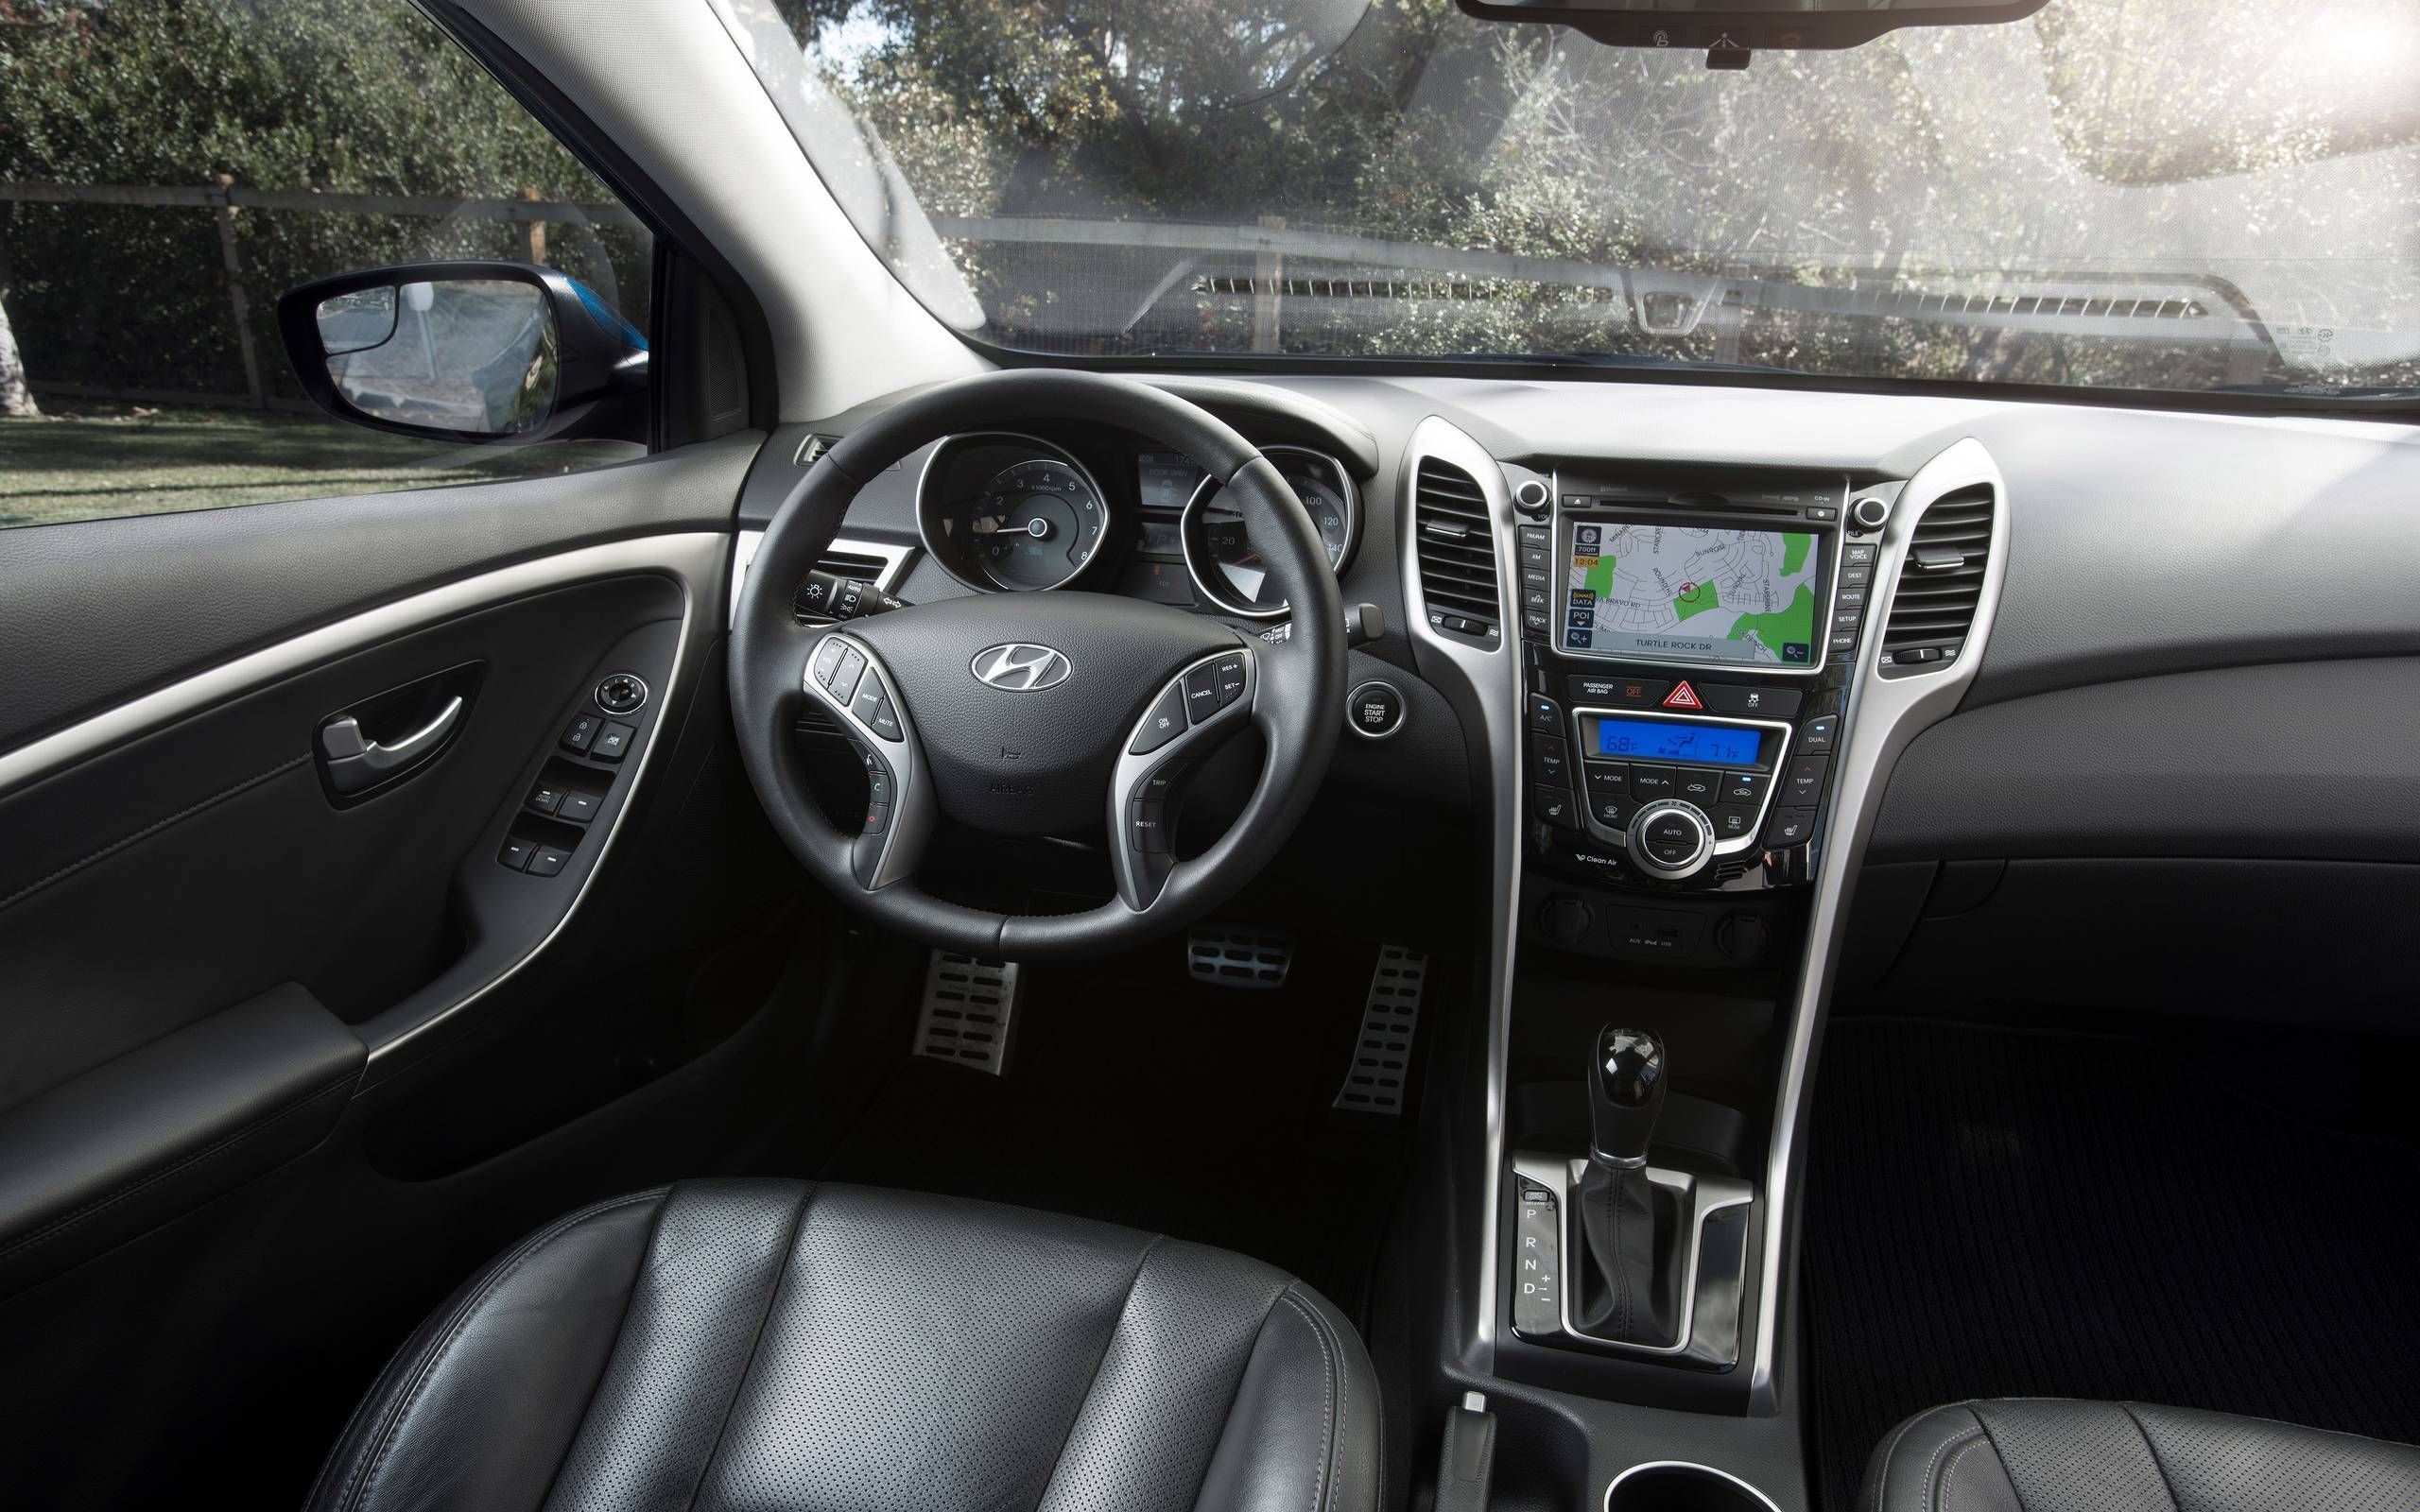 2014 Hyundai Elantra GT review notes